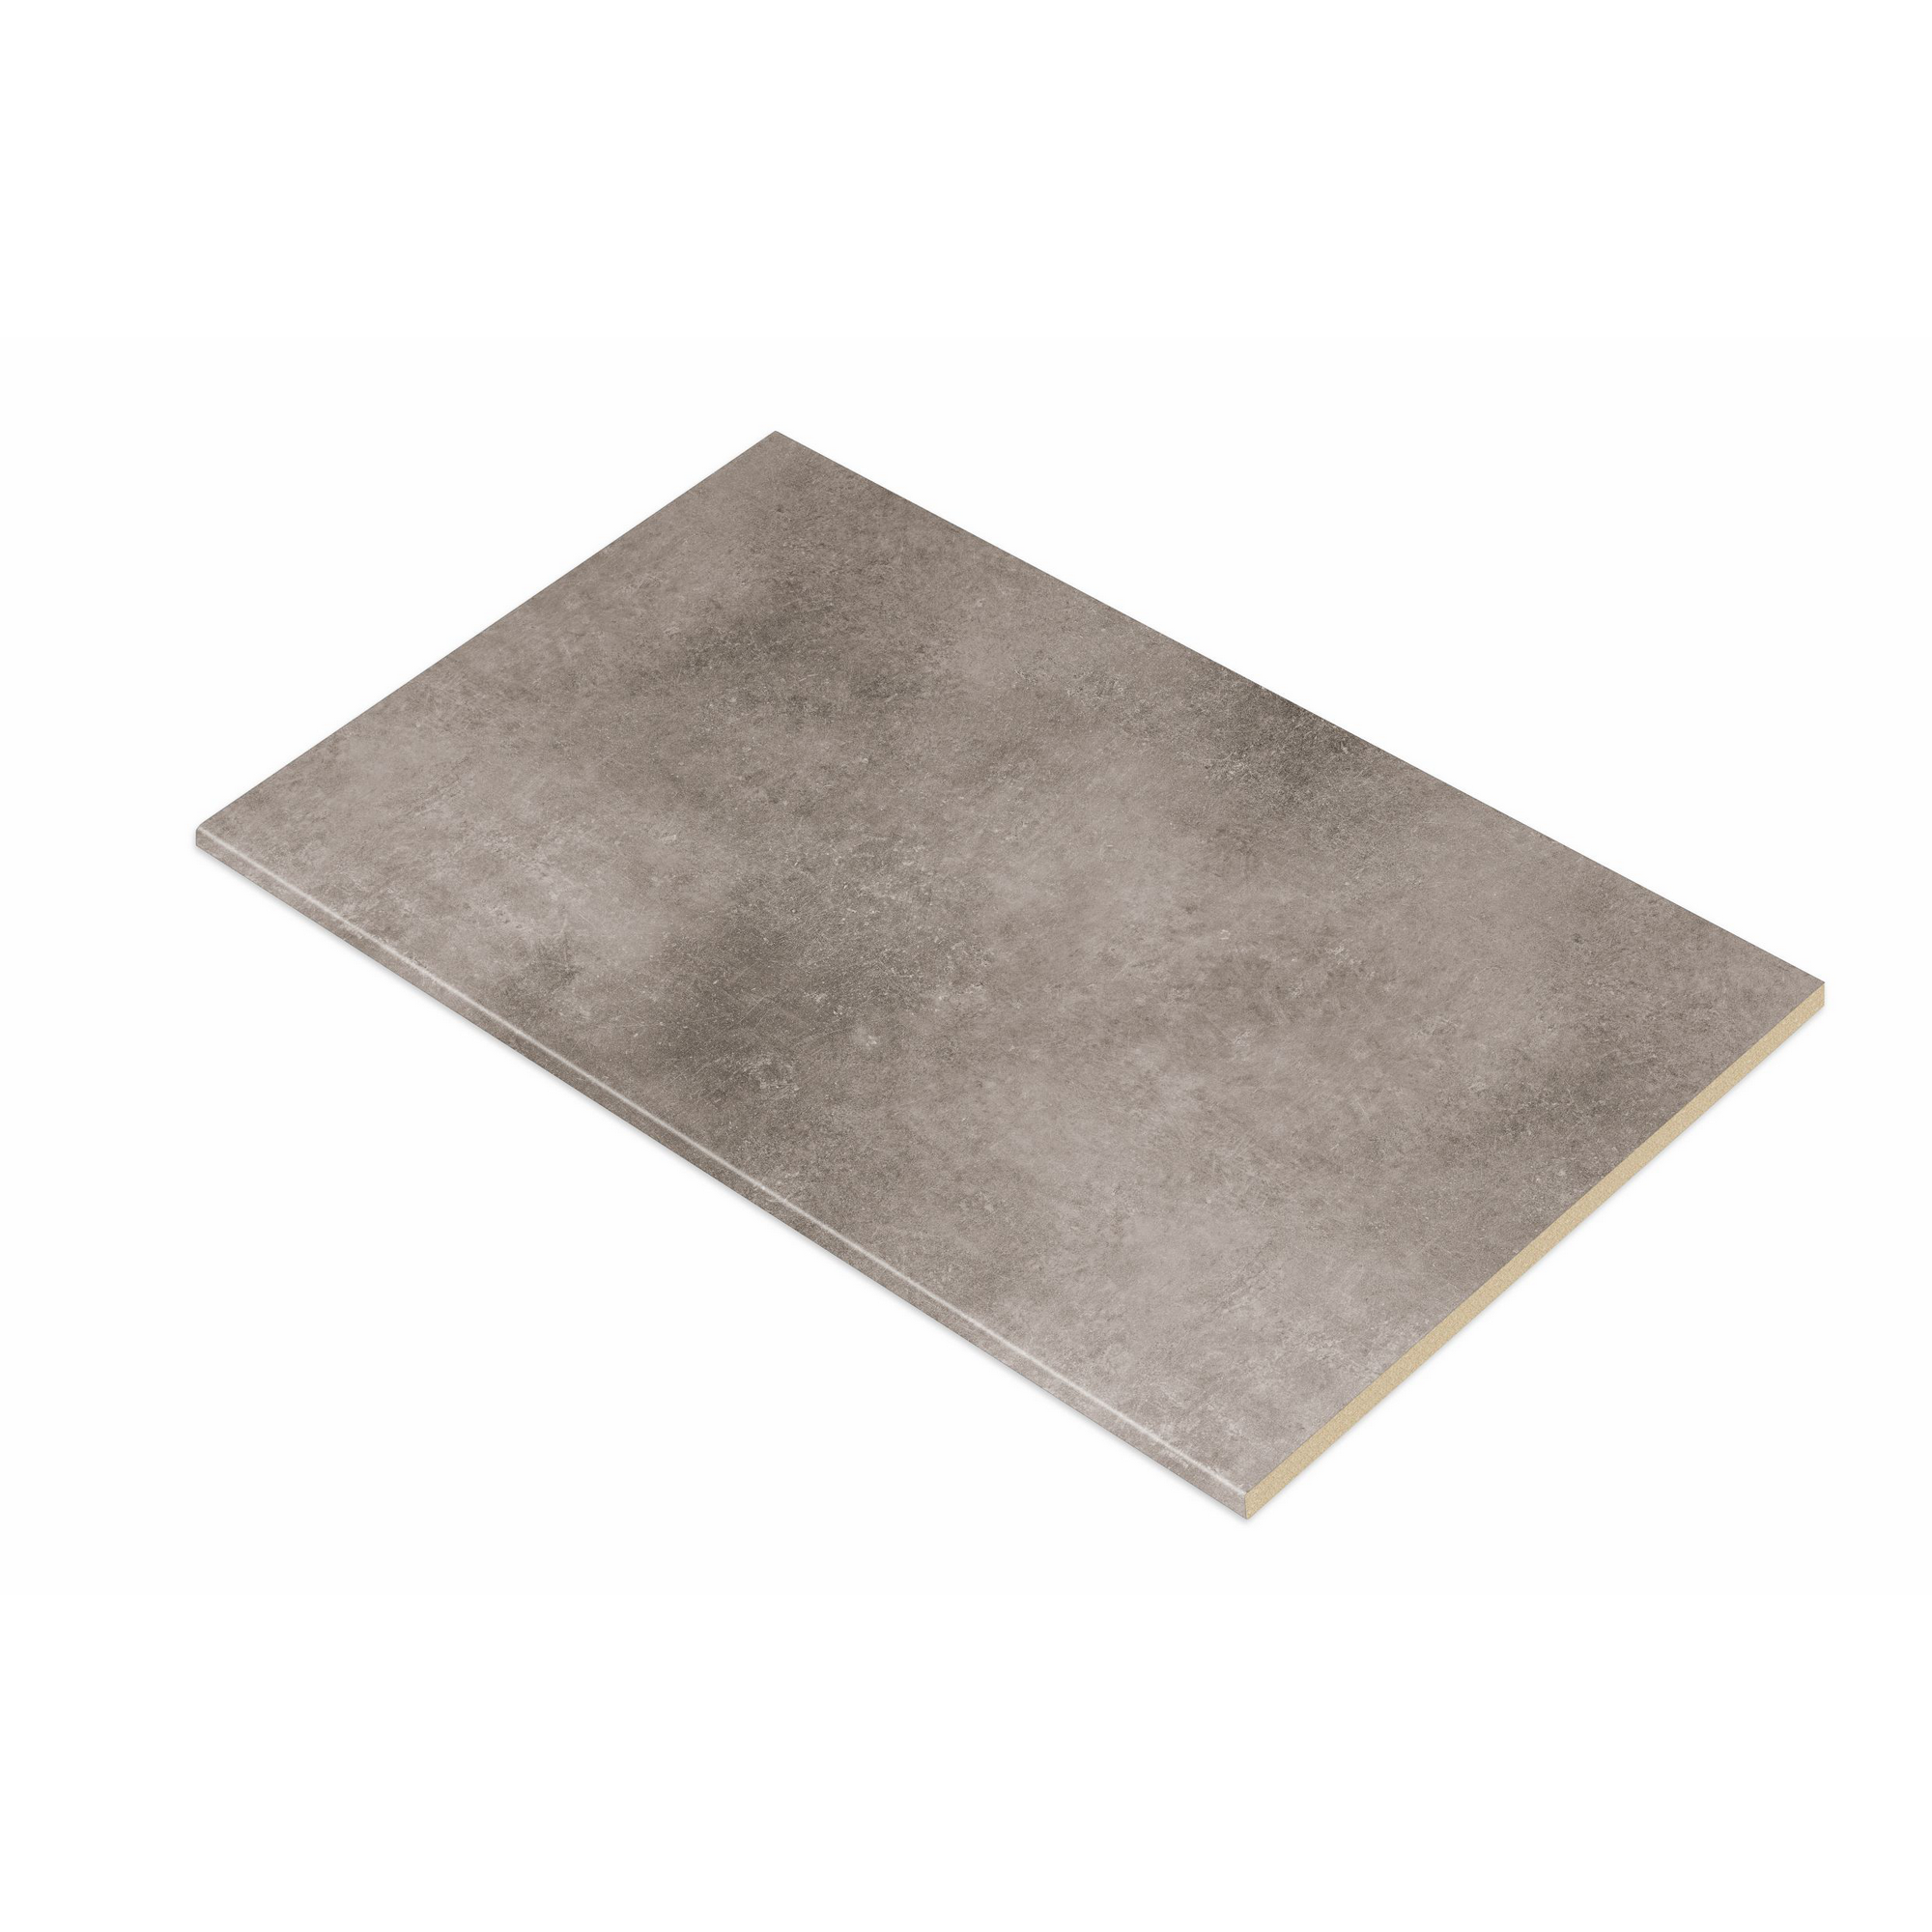 Mehrzweckplatte Marmoroptik grau 2800 x 600 x 28 mm + product picture